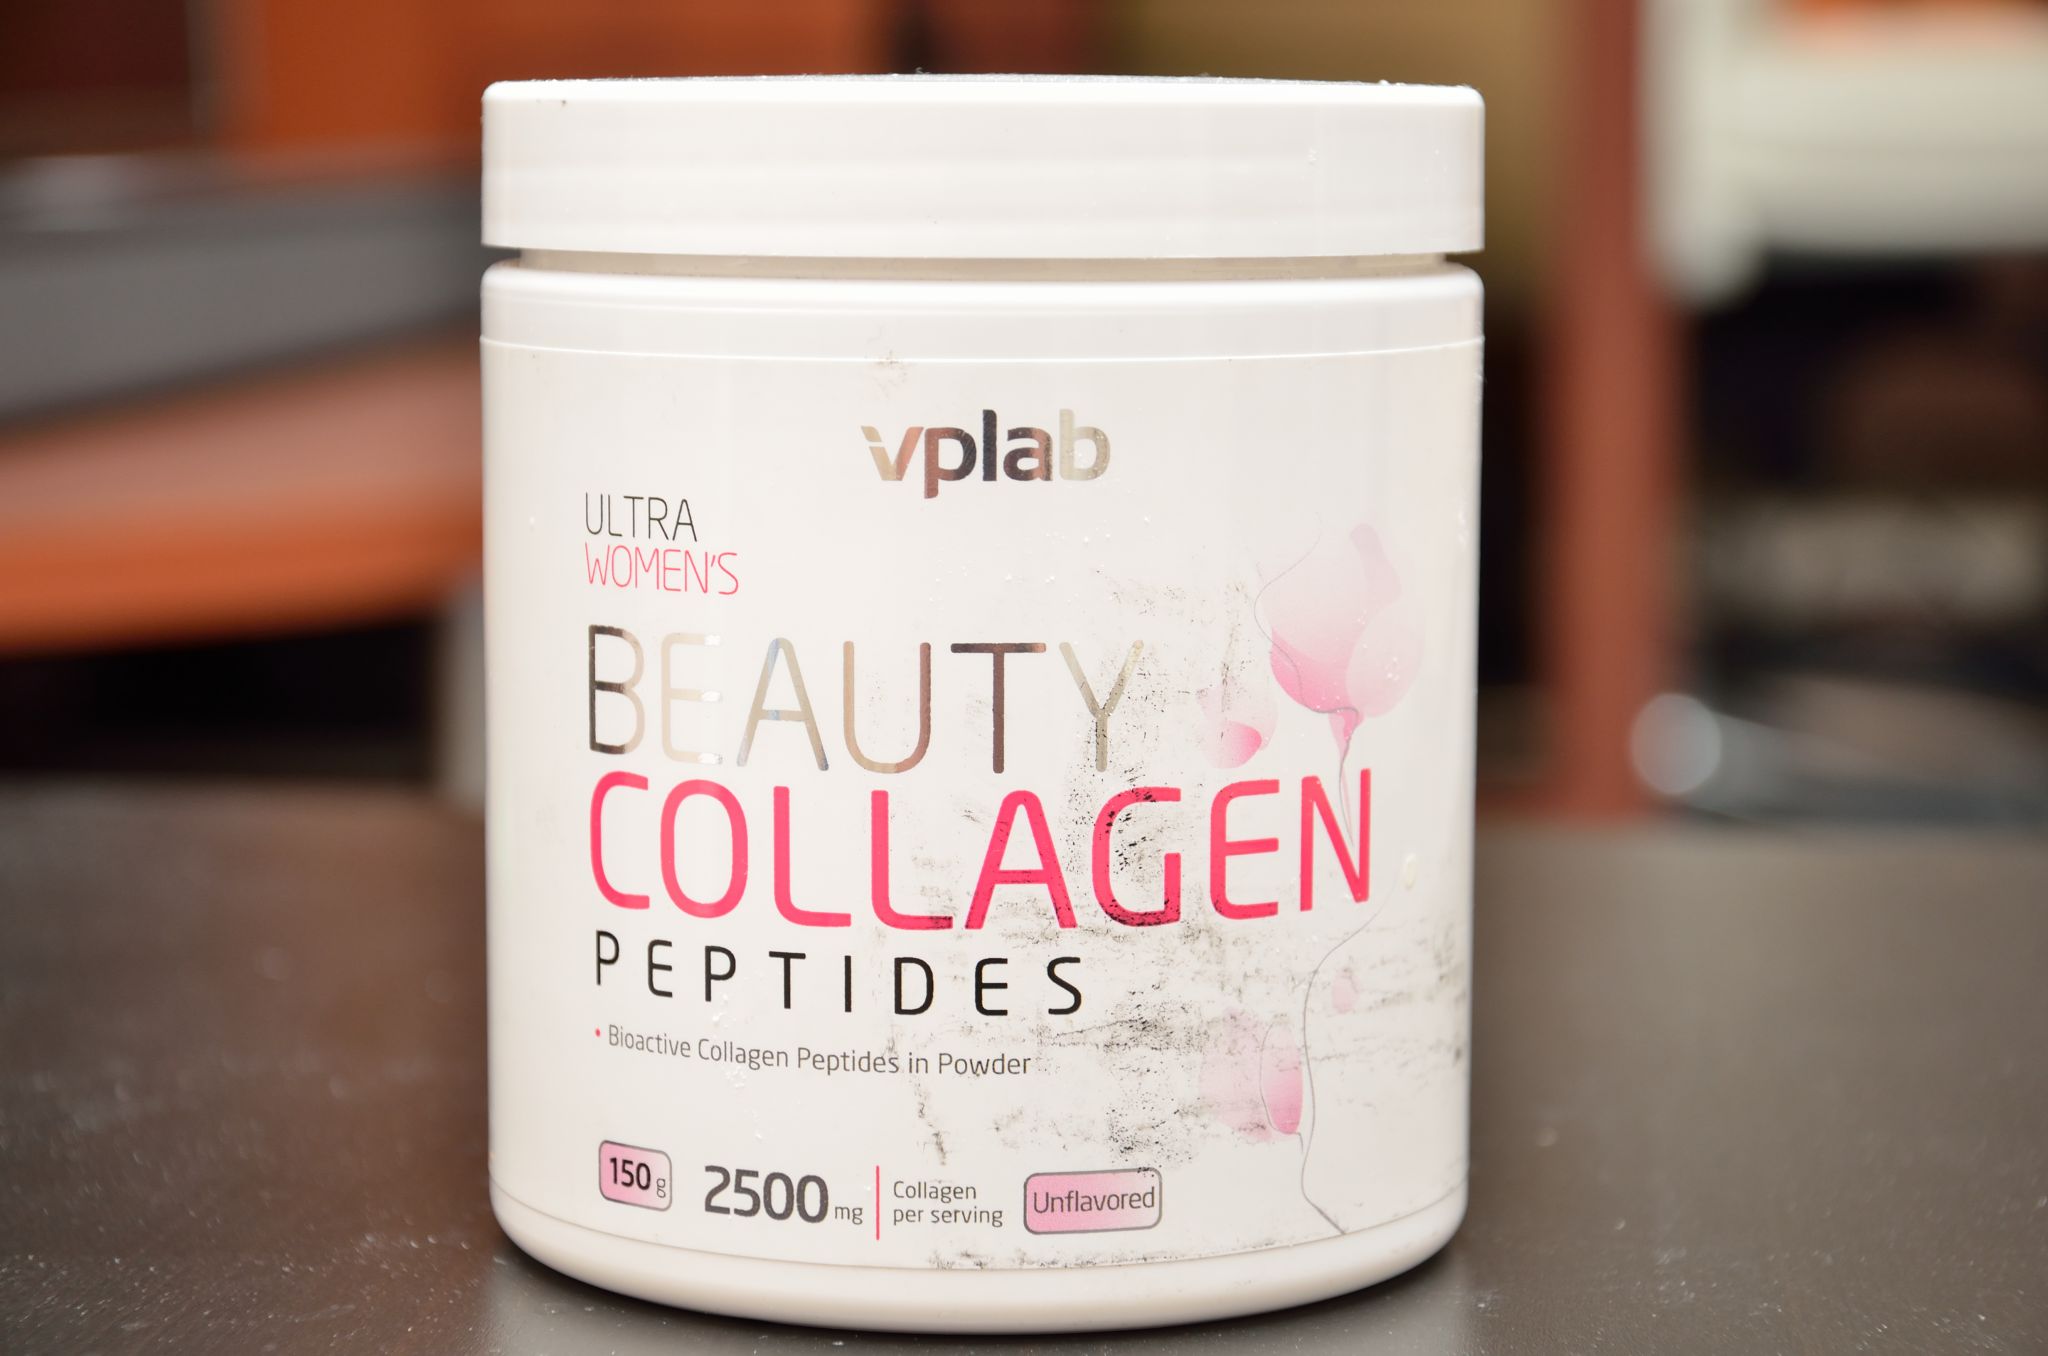 Коллаген челябинск. ВПЛАБ Бьюти коллаген пептид 150г. Бьюти коллаген пептид VPLAB. Коллаген VPLAB / Beauty Collagen Peptides / 150 g. Коллаген VPLAB Collagen Peptides.